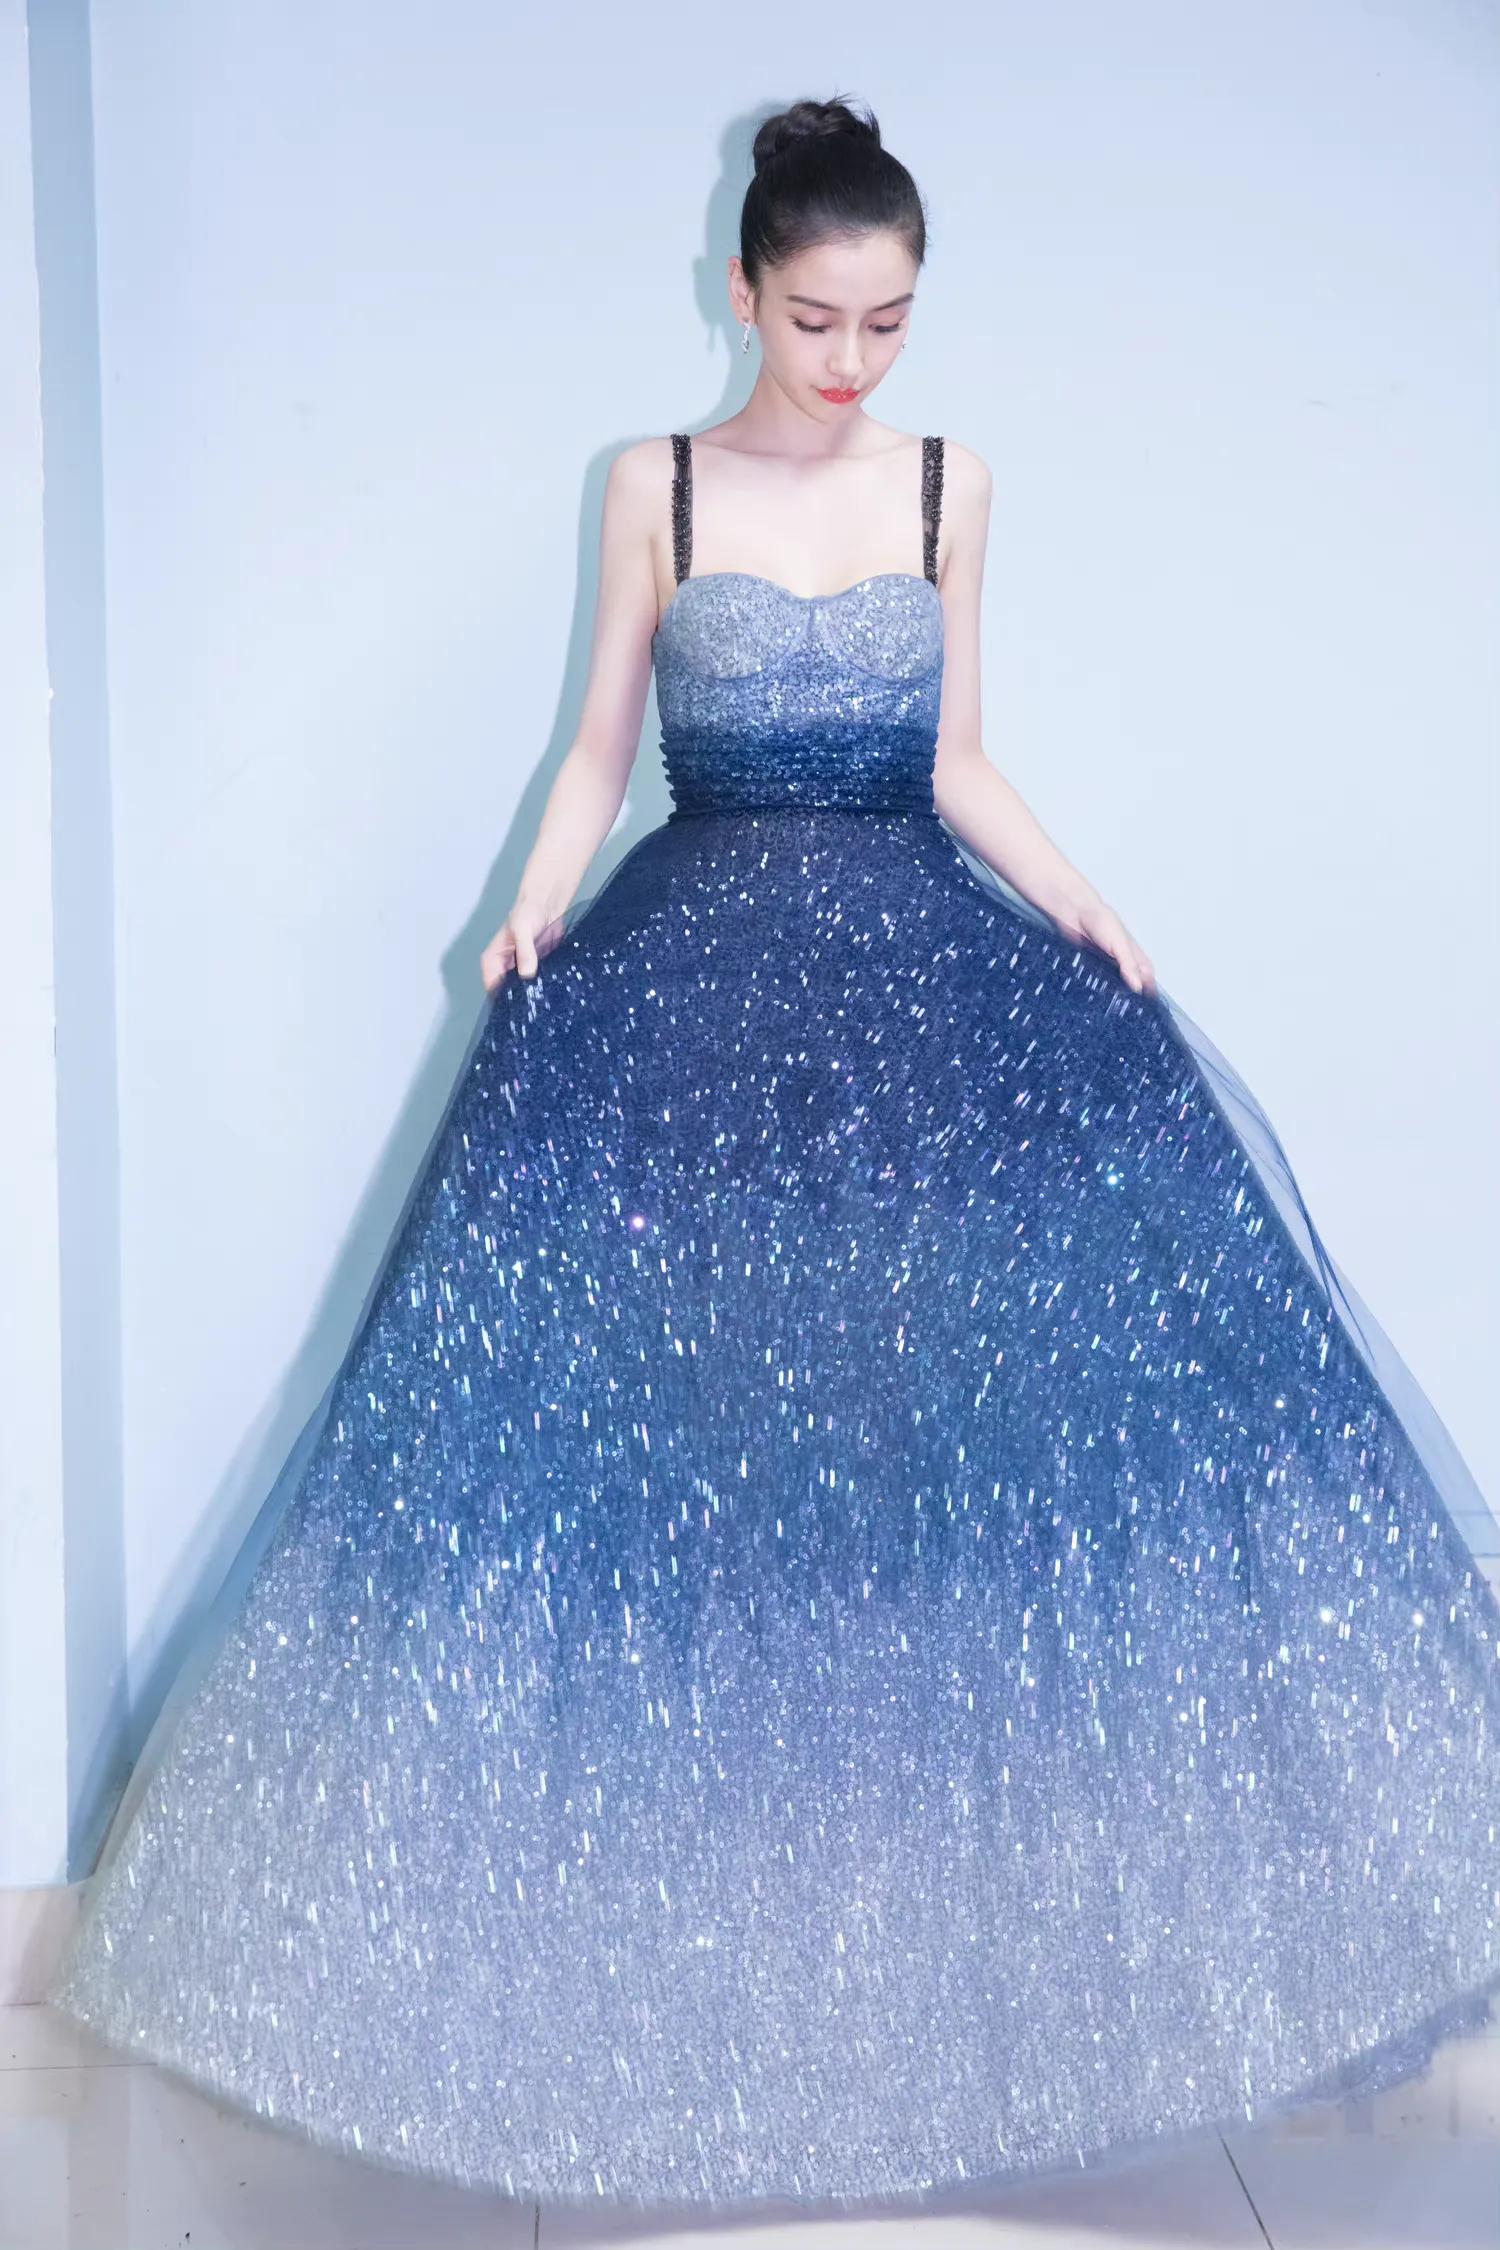 Dior星空裙图片